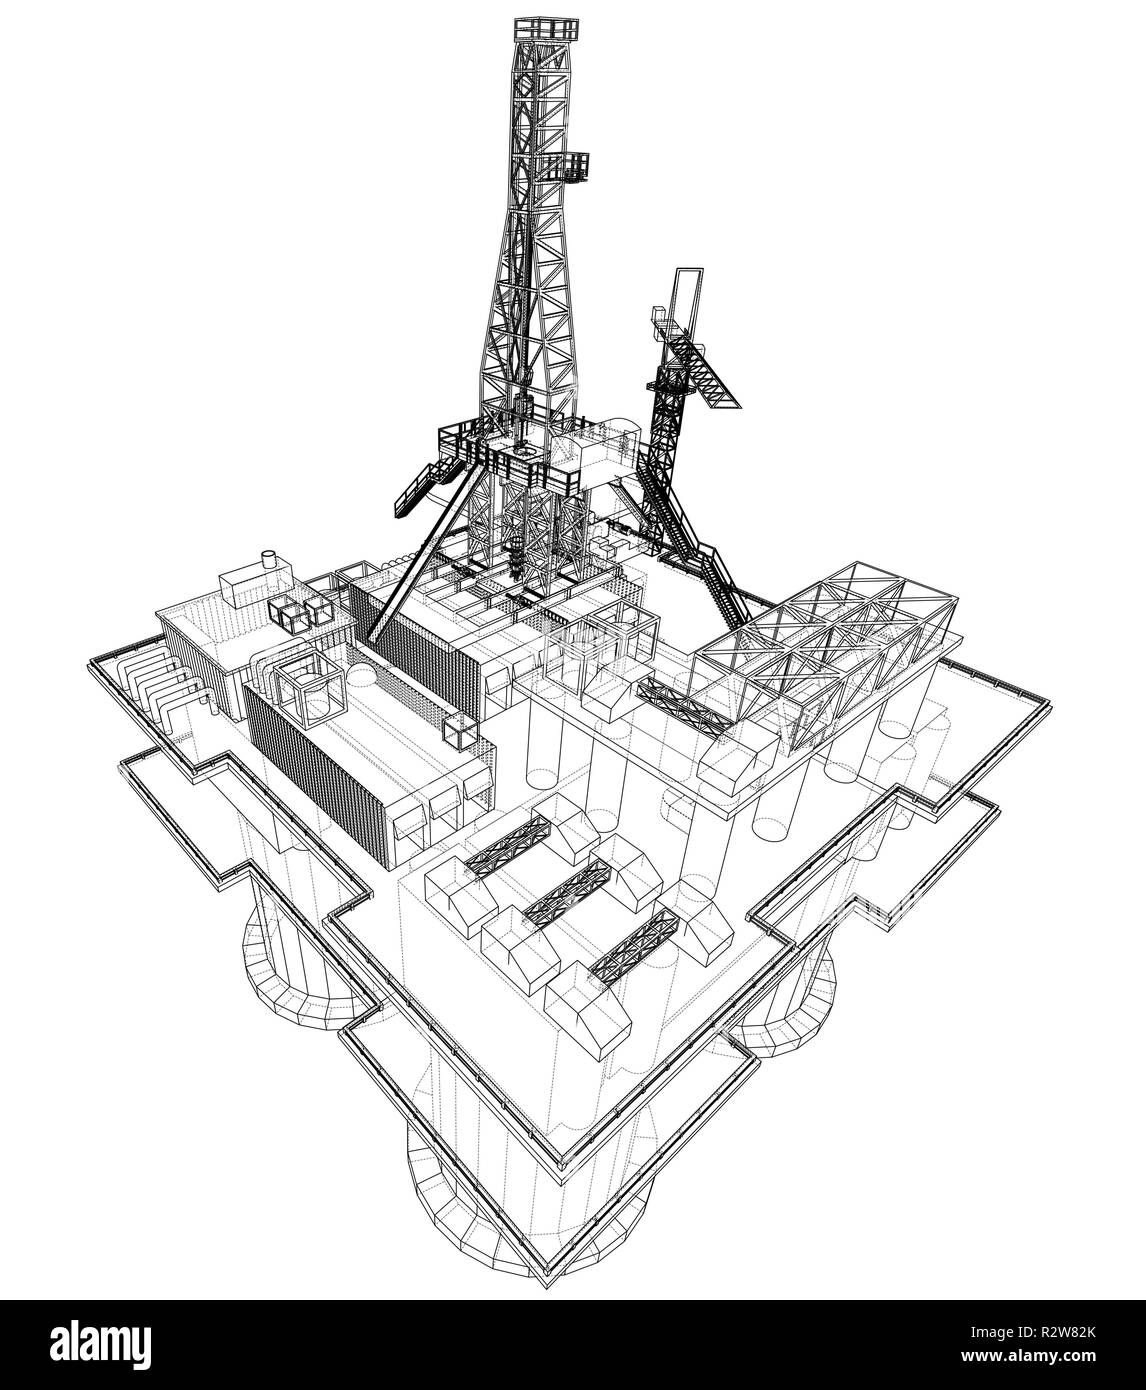 Offshore oil rig drilling platform concept. Vector Stock Vector